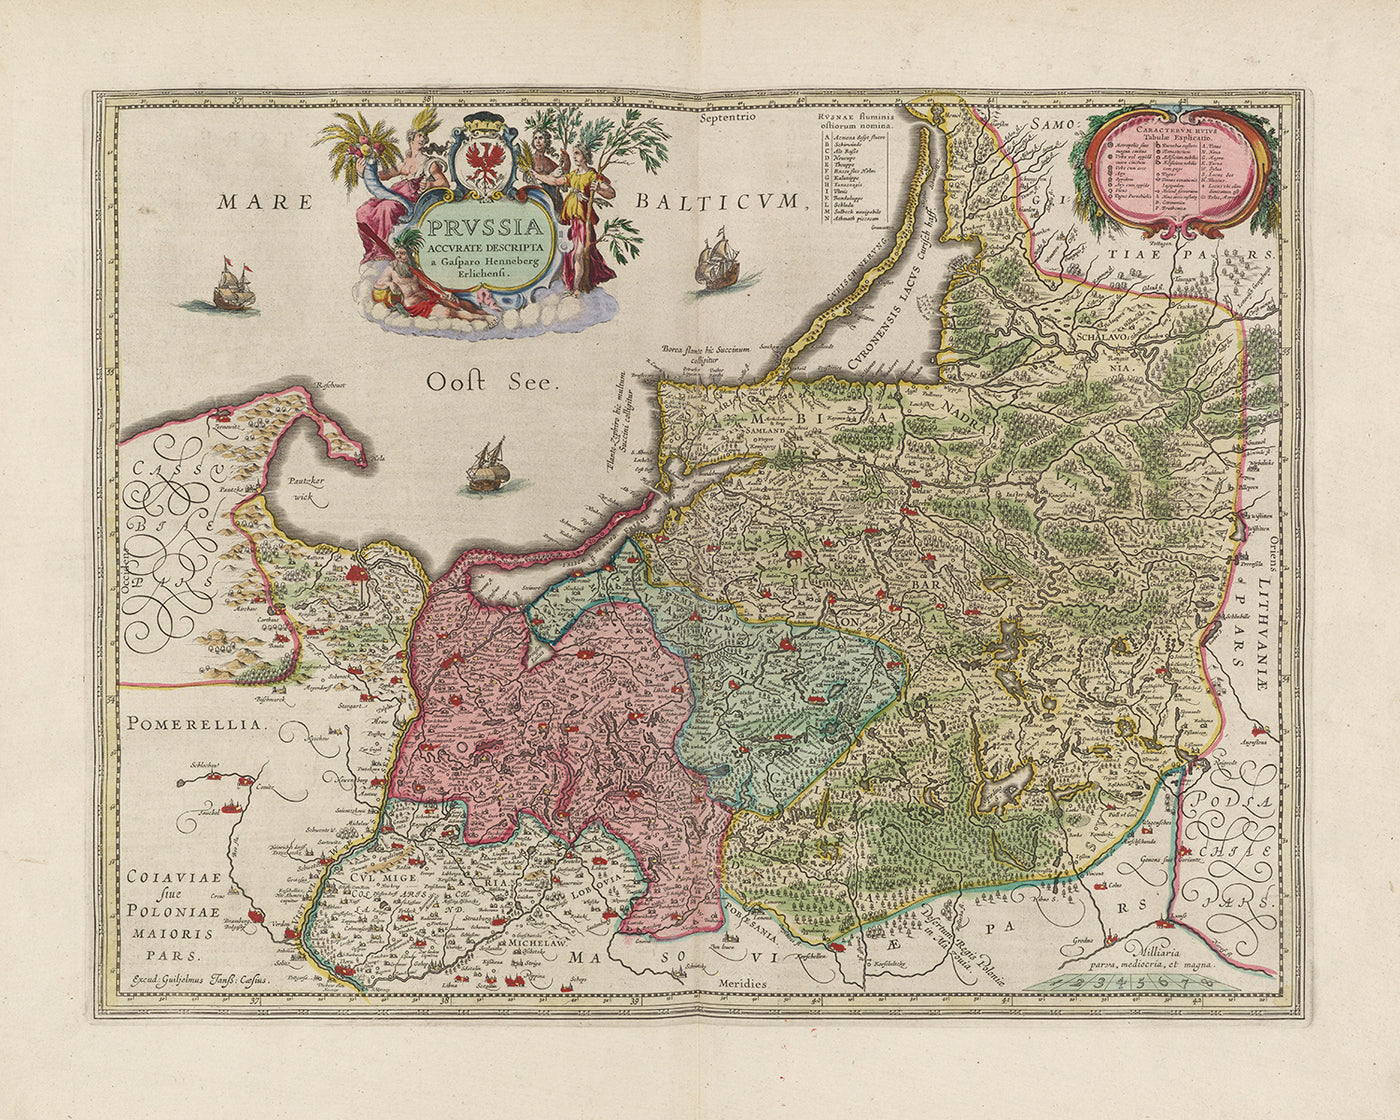 Old Map of Warmian-Masurian Voivodeship (Prussia) by Joan Blaeu, 1665: Olsztyn, Elbląg, Ełk, Ostroda, and Giżycko, with Masurian Lakes, Biskupiec and Łyna